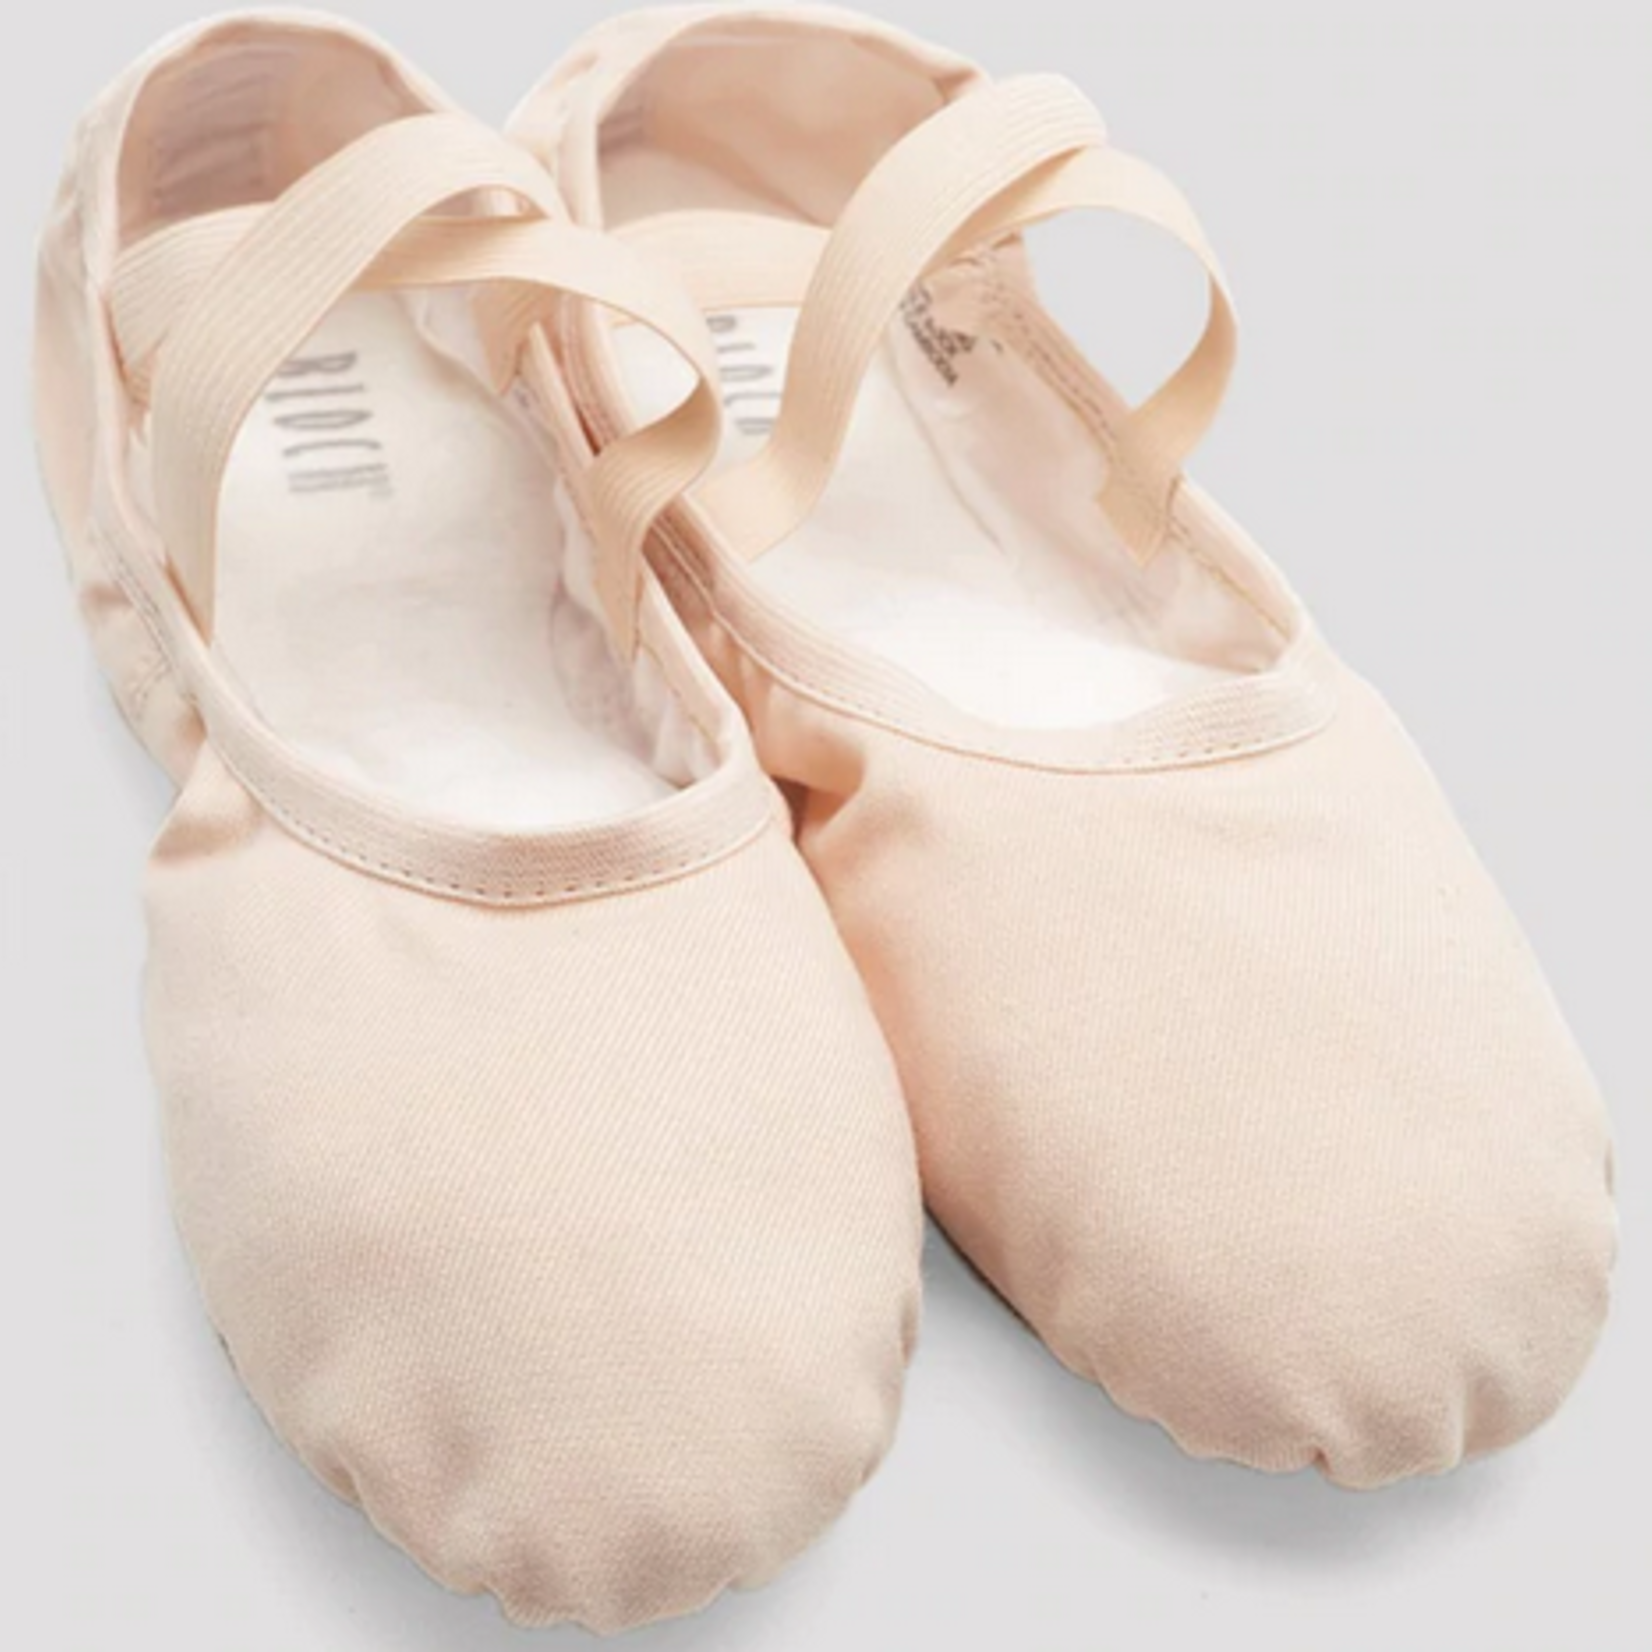 Bloch Bloch S0284L Performa Stretch Canvas Ballet Shoe